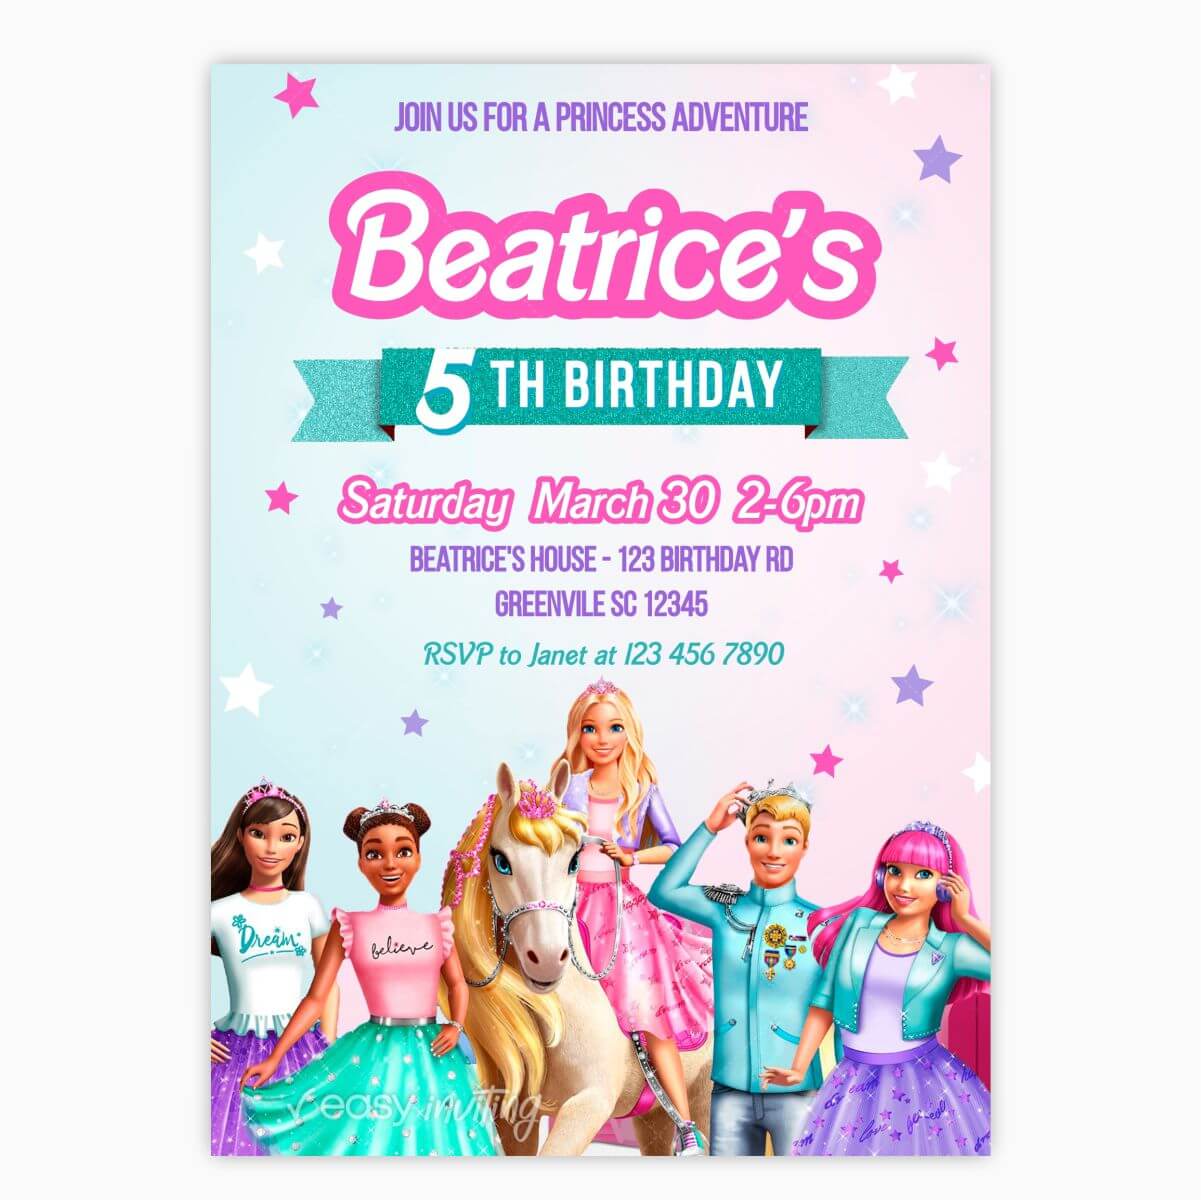 Barbie Dreamhouse Adventure Birthday Party Printable Files  Adventure  birthday party, Barbie birthday party, Barbie dream house